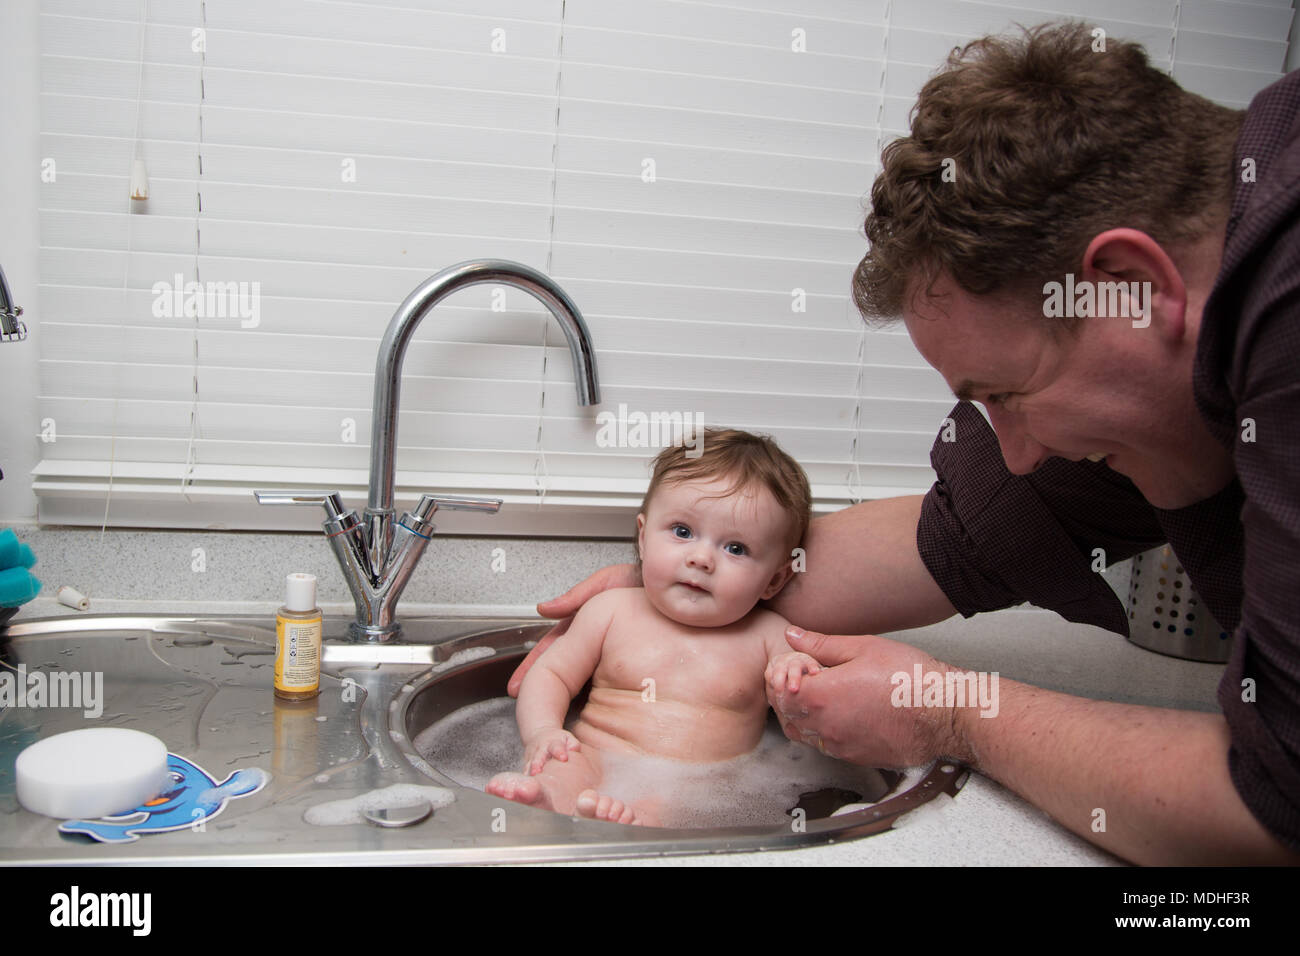 Dad Washing Baby In Kitchen Sink Stock Photo 180479259 Alamy